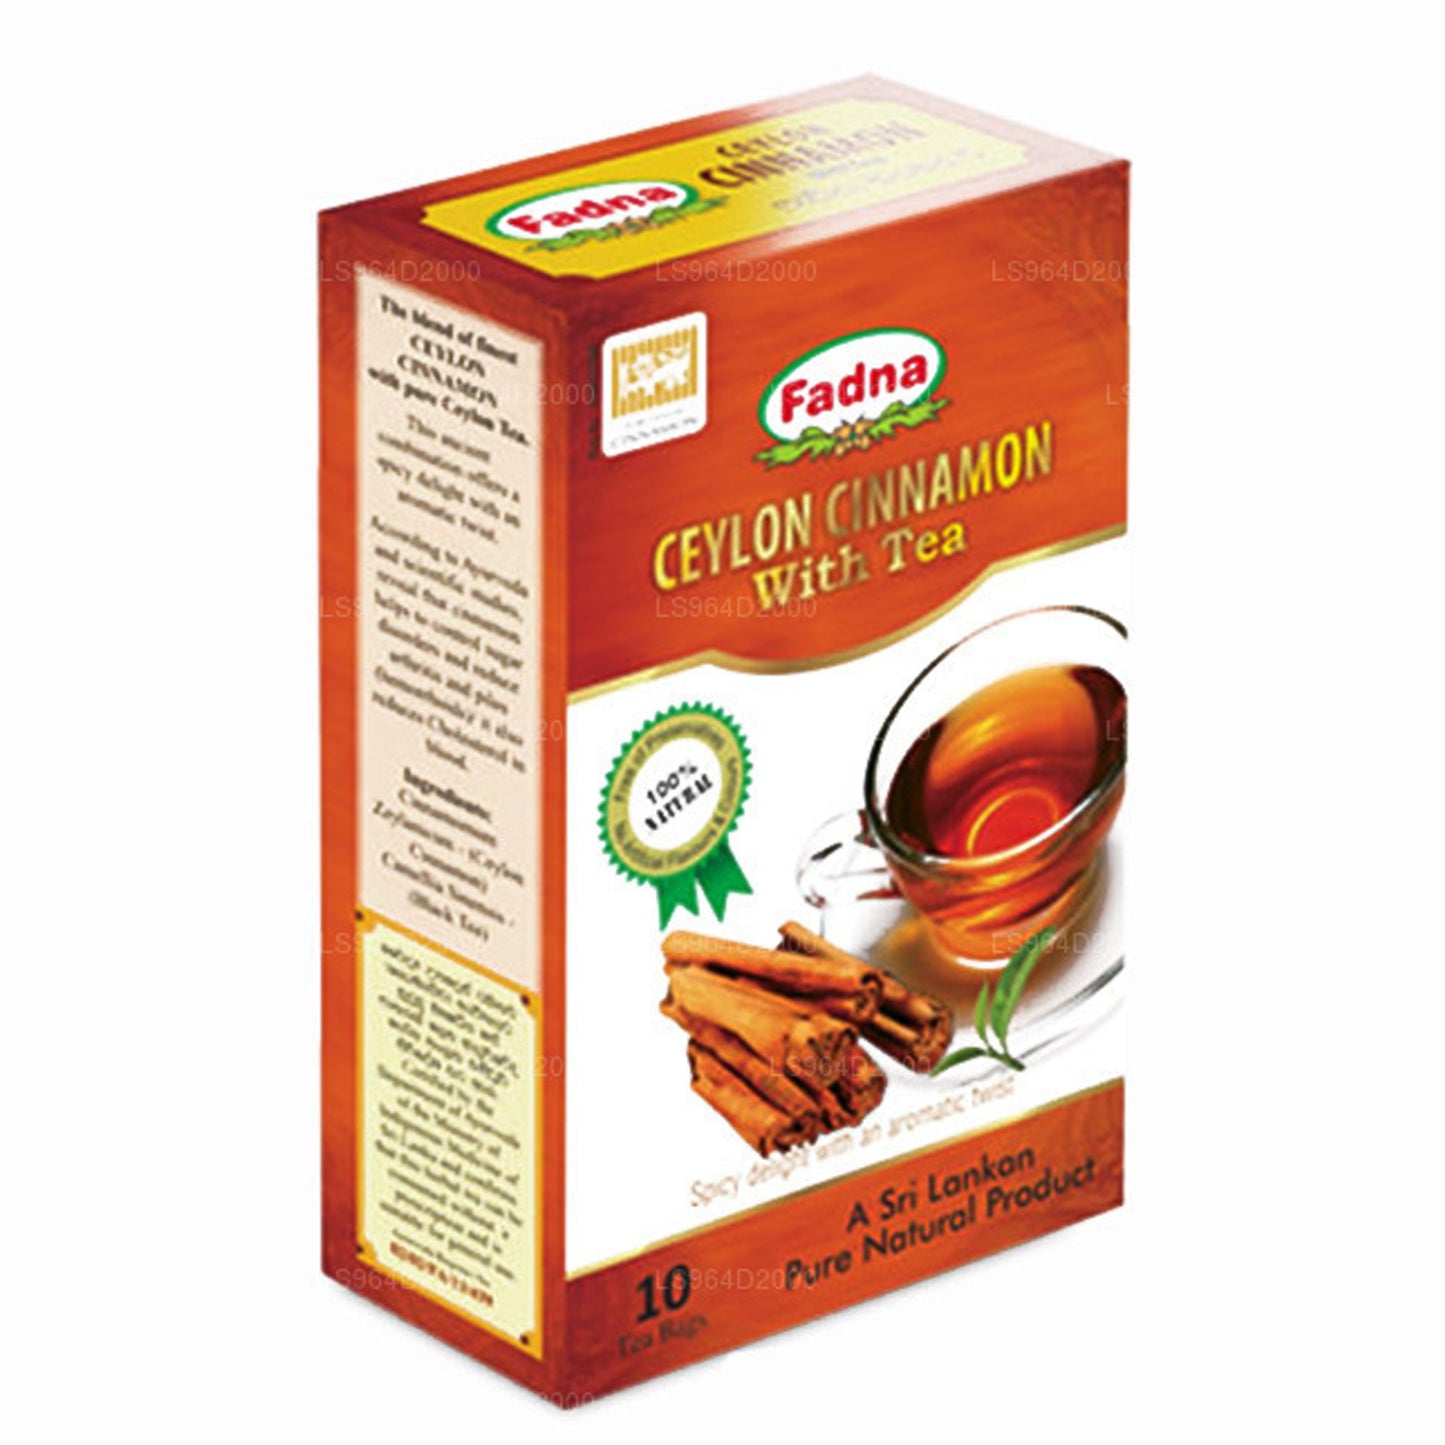 Fadna Ceylon Cynamon Herbata Ziołowa (20g) 10 torebek